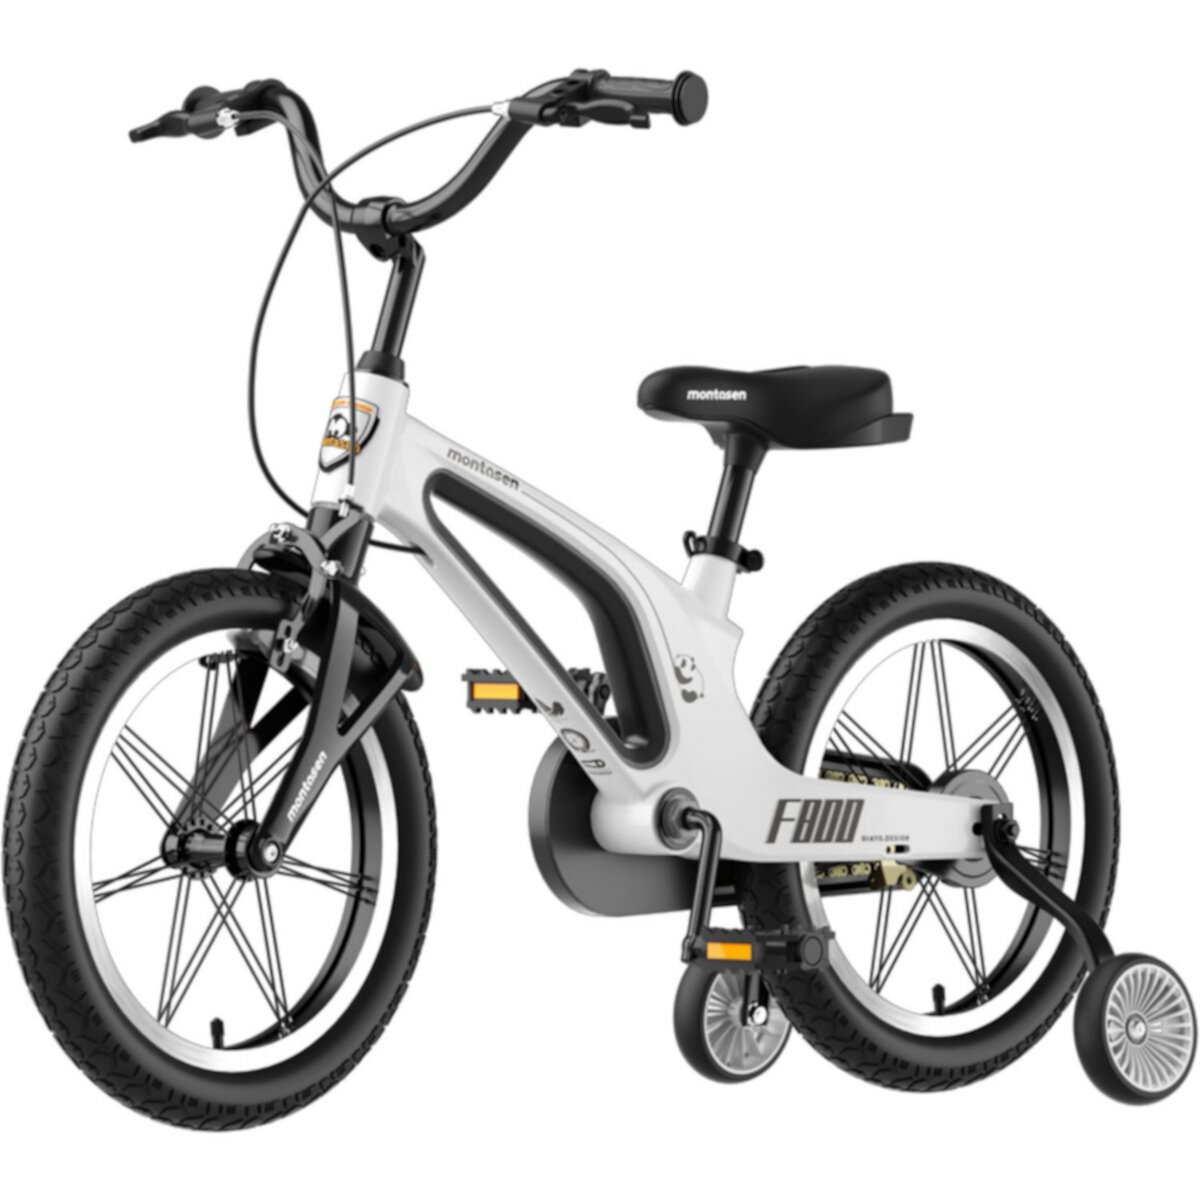 16-Inch Kids' Bike with Training Wheels, Single Speed Cruiser Bike Abrihome